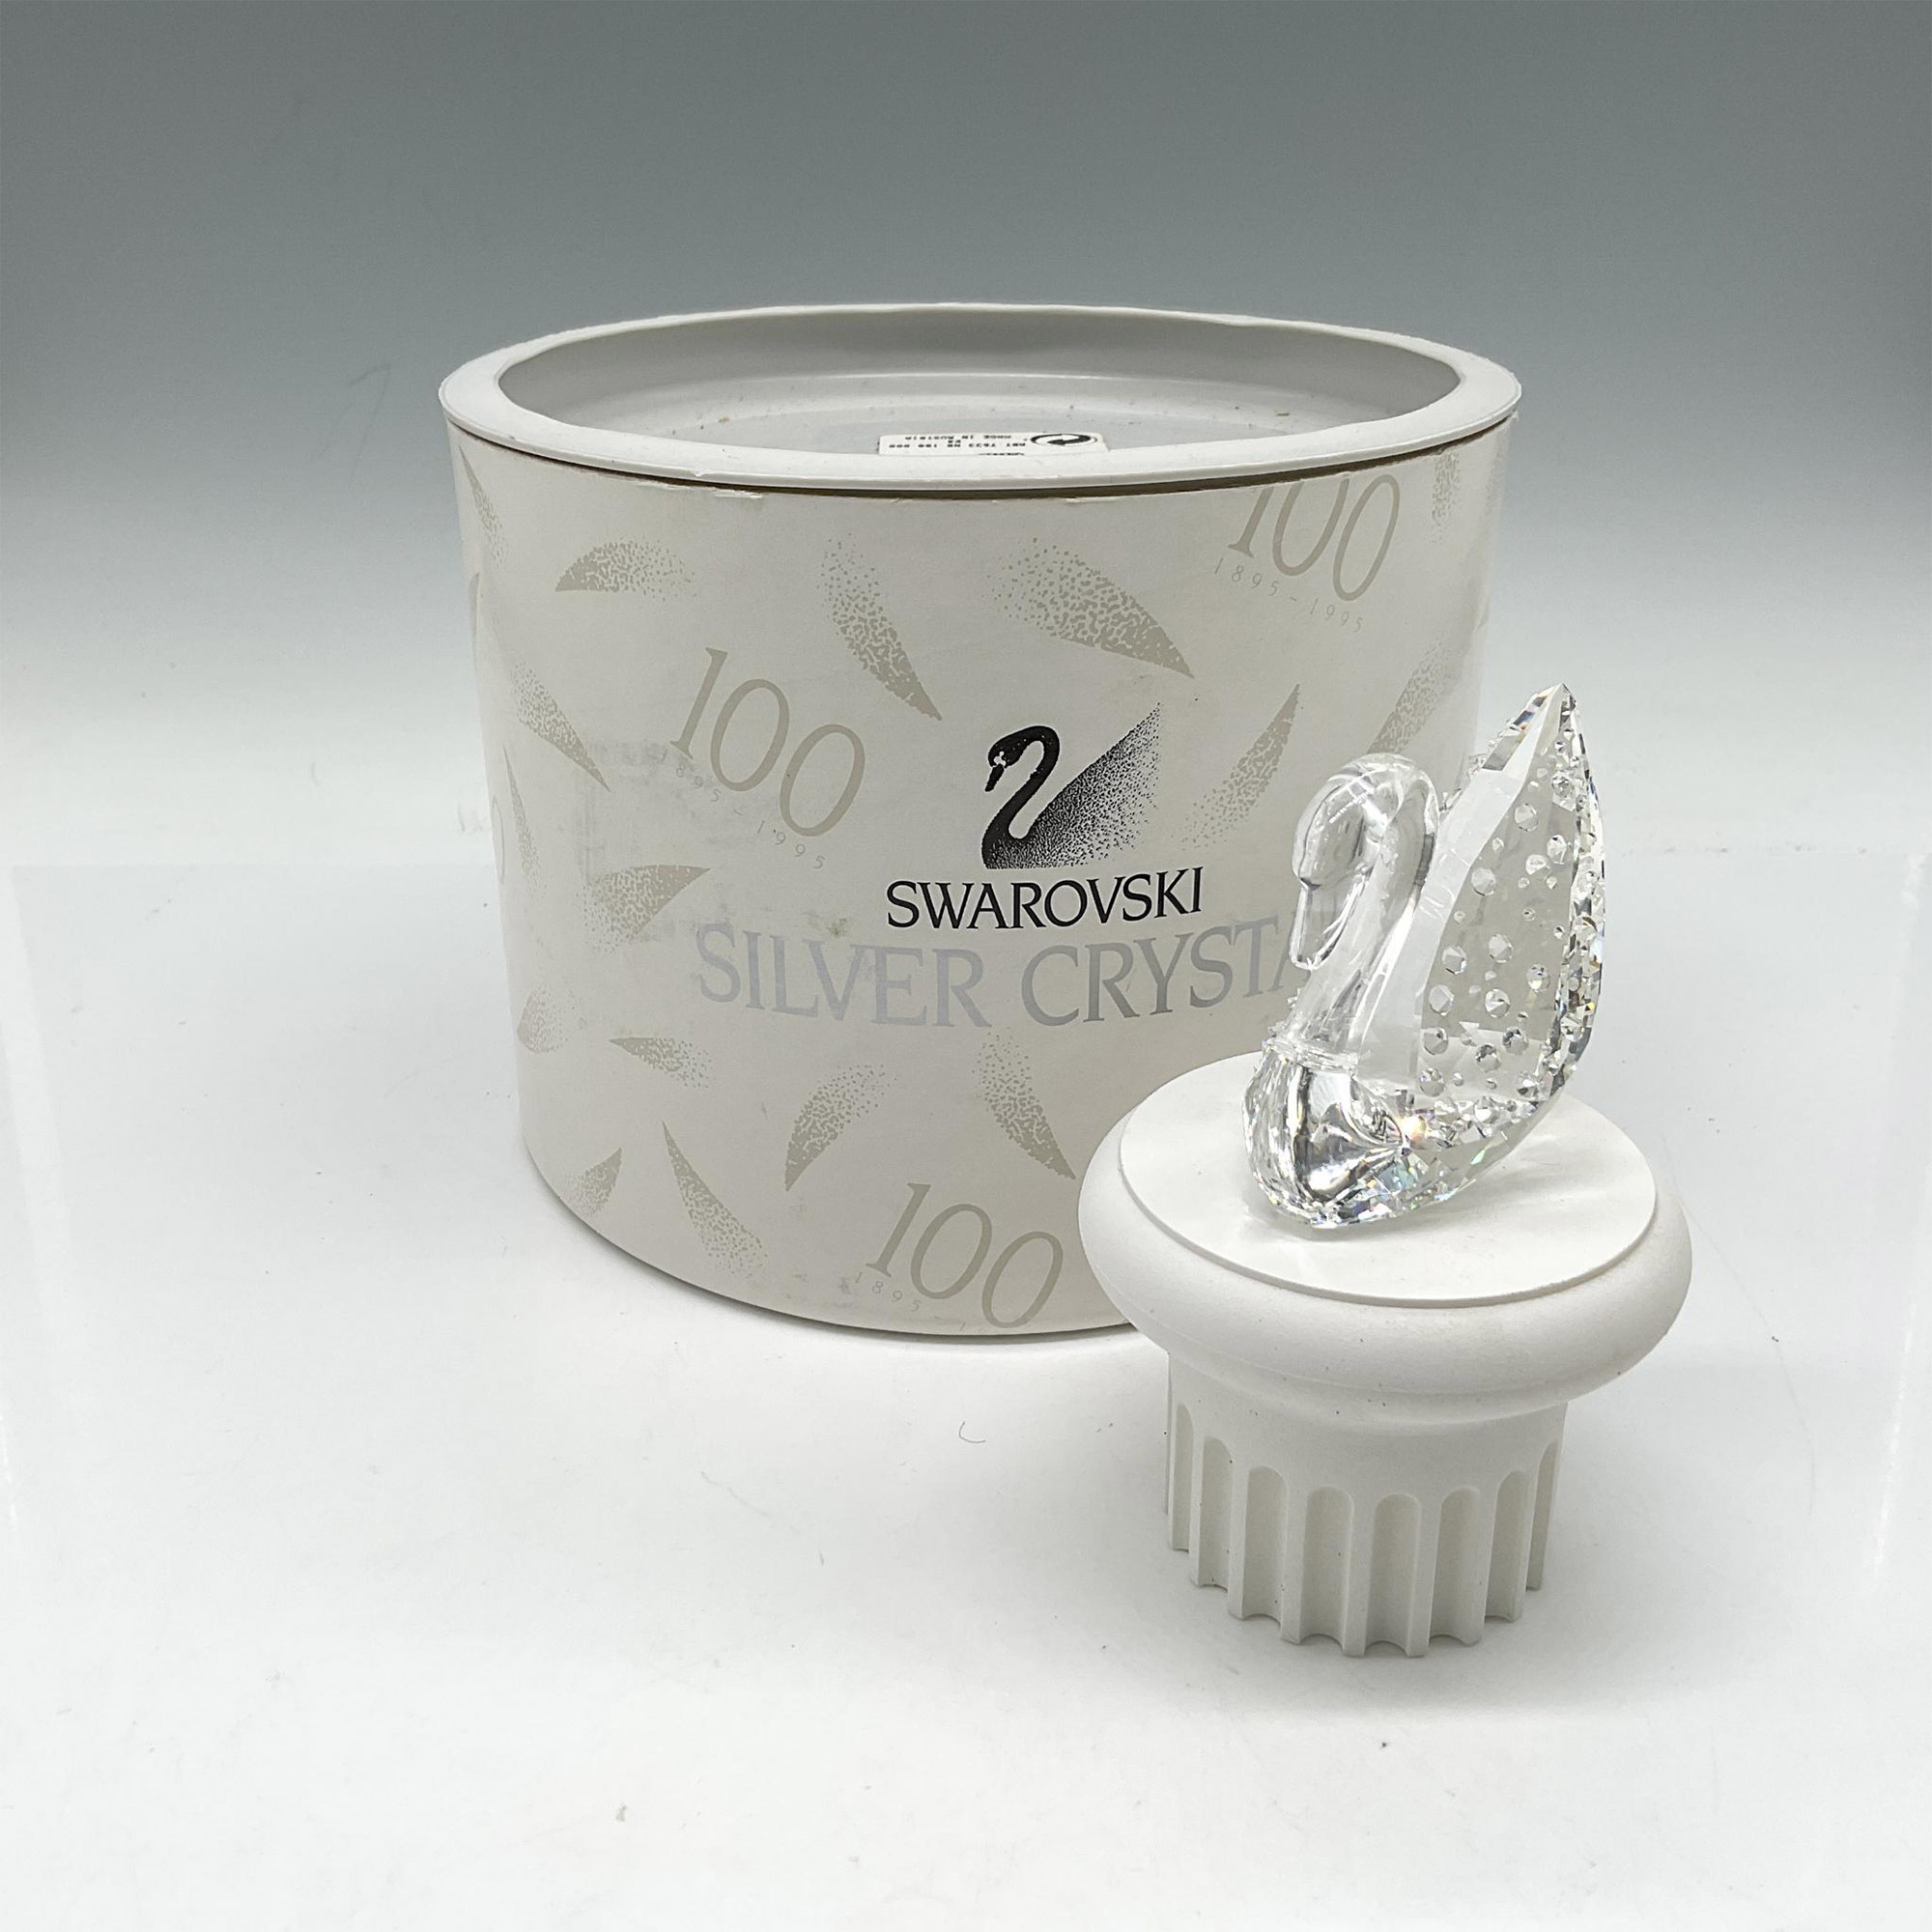 Swarovski Silver Crystal Figurine, 100th Anniversary Swan - Image 4 of 4